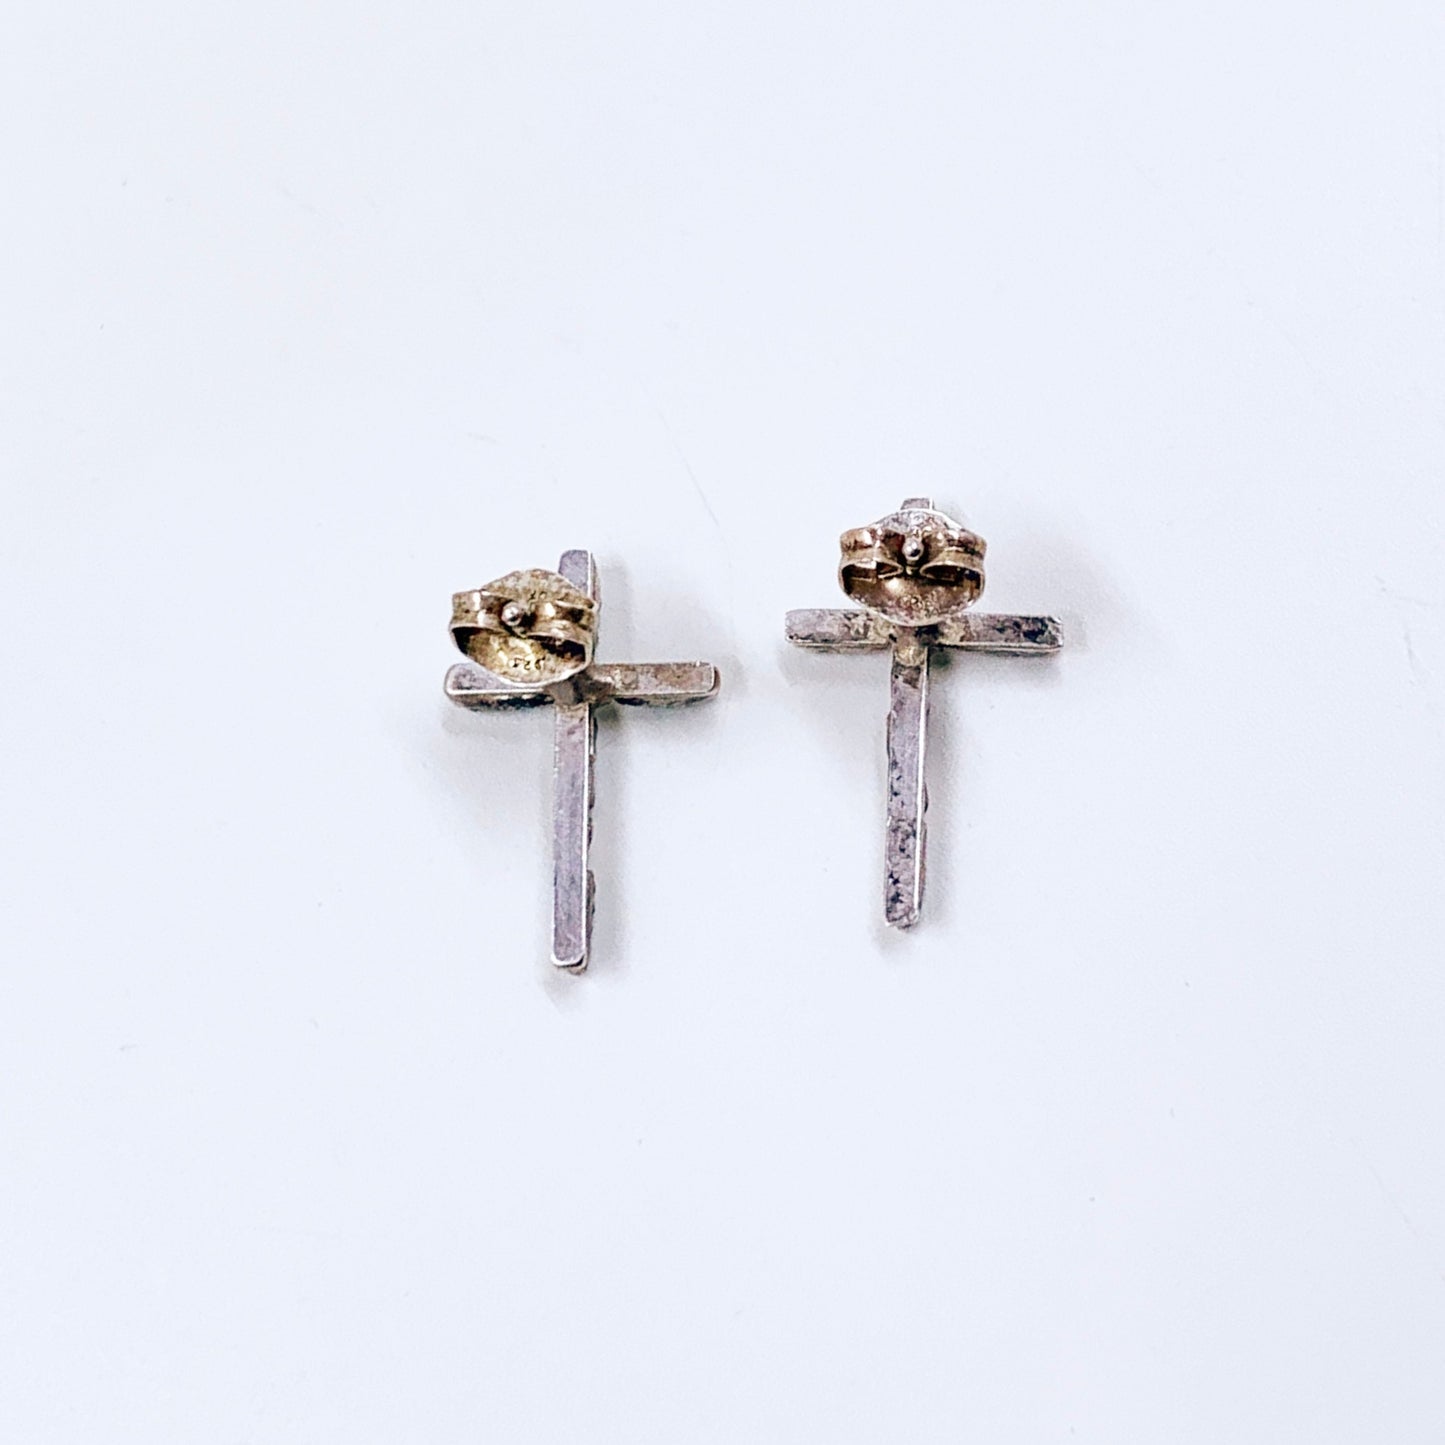 Vintage Turquoise Needle Point Cross Earrings | Sterling Southwest Turquoise Stud Earrings | Needle Point Stud Earrings